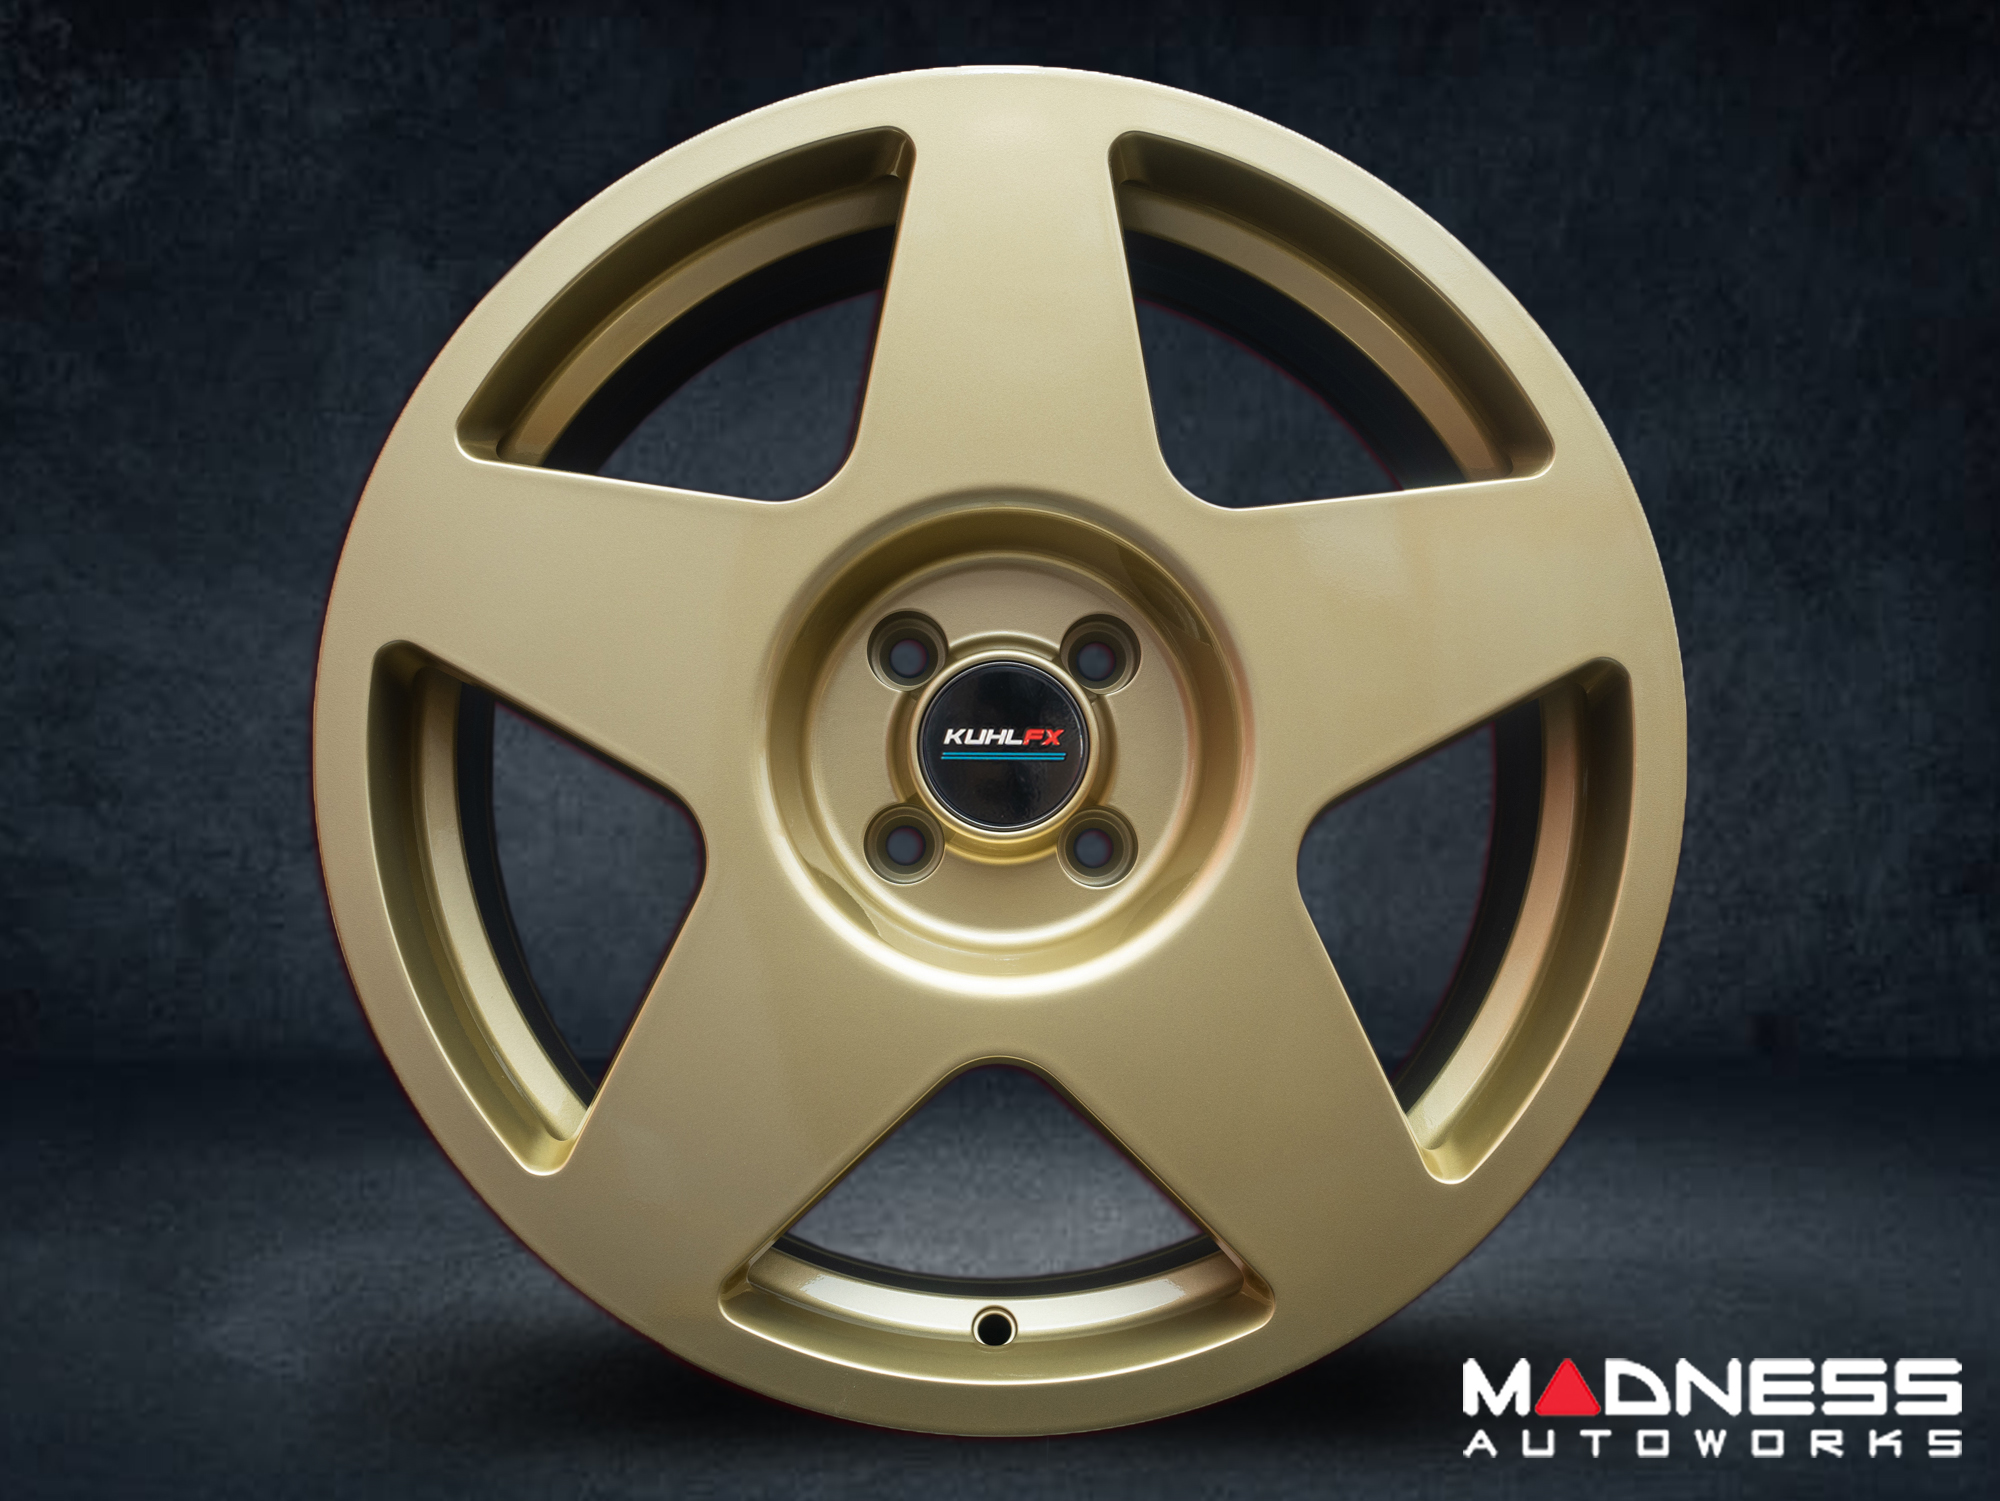 FIAT 500 Custom Wheels - KUHLFX - Pista - Gloss Gold - Single Wheel - 17"